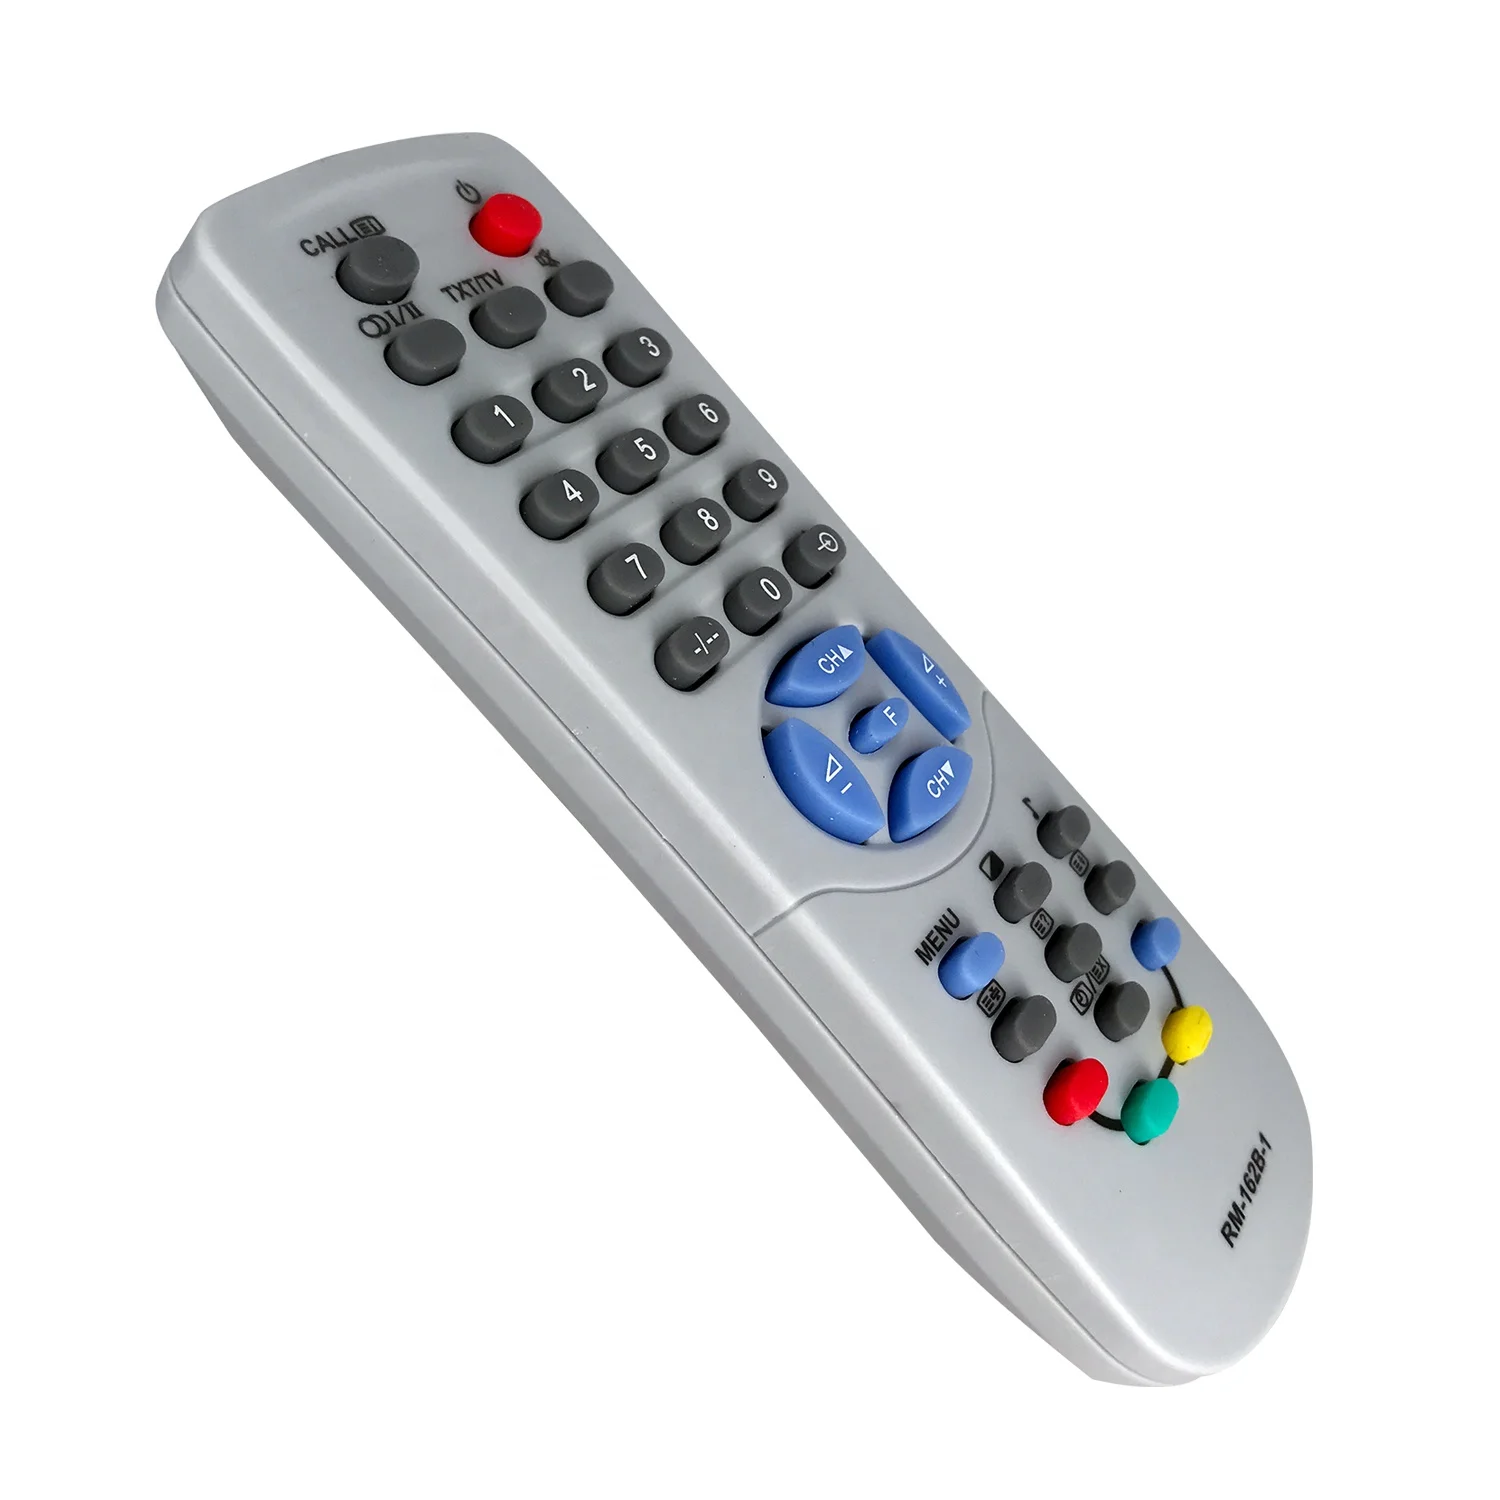 Control remoto universal TV TOSHIBA - China Control remoto